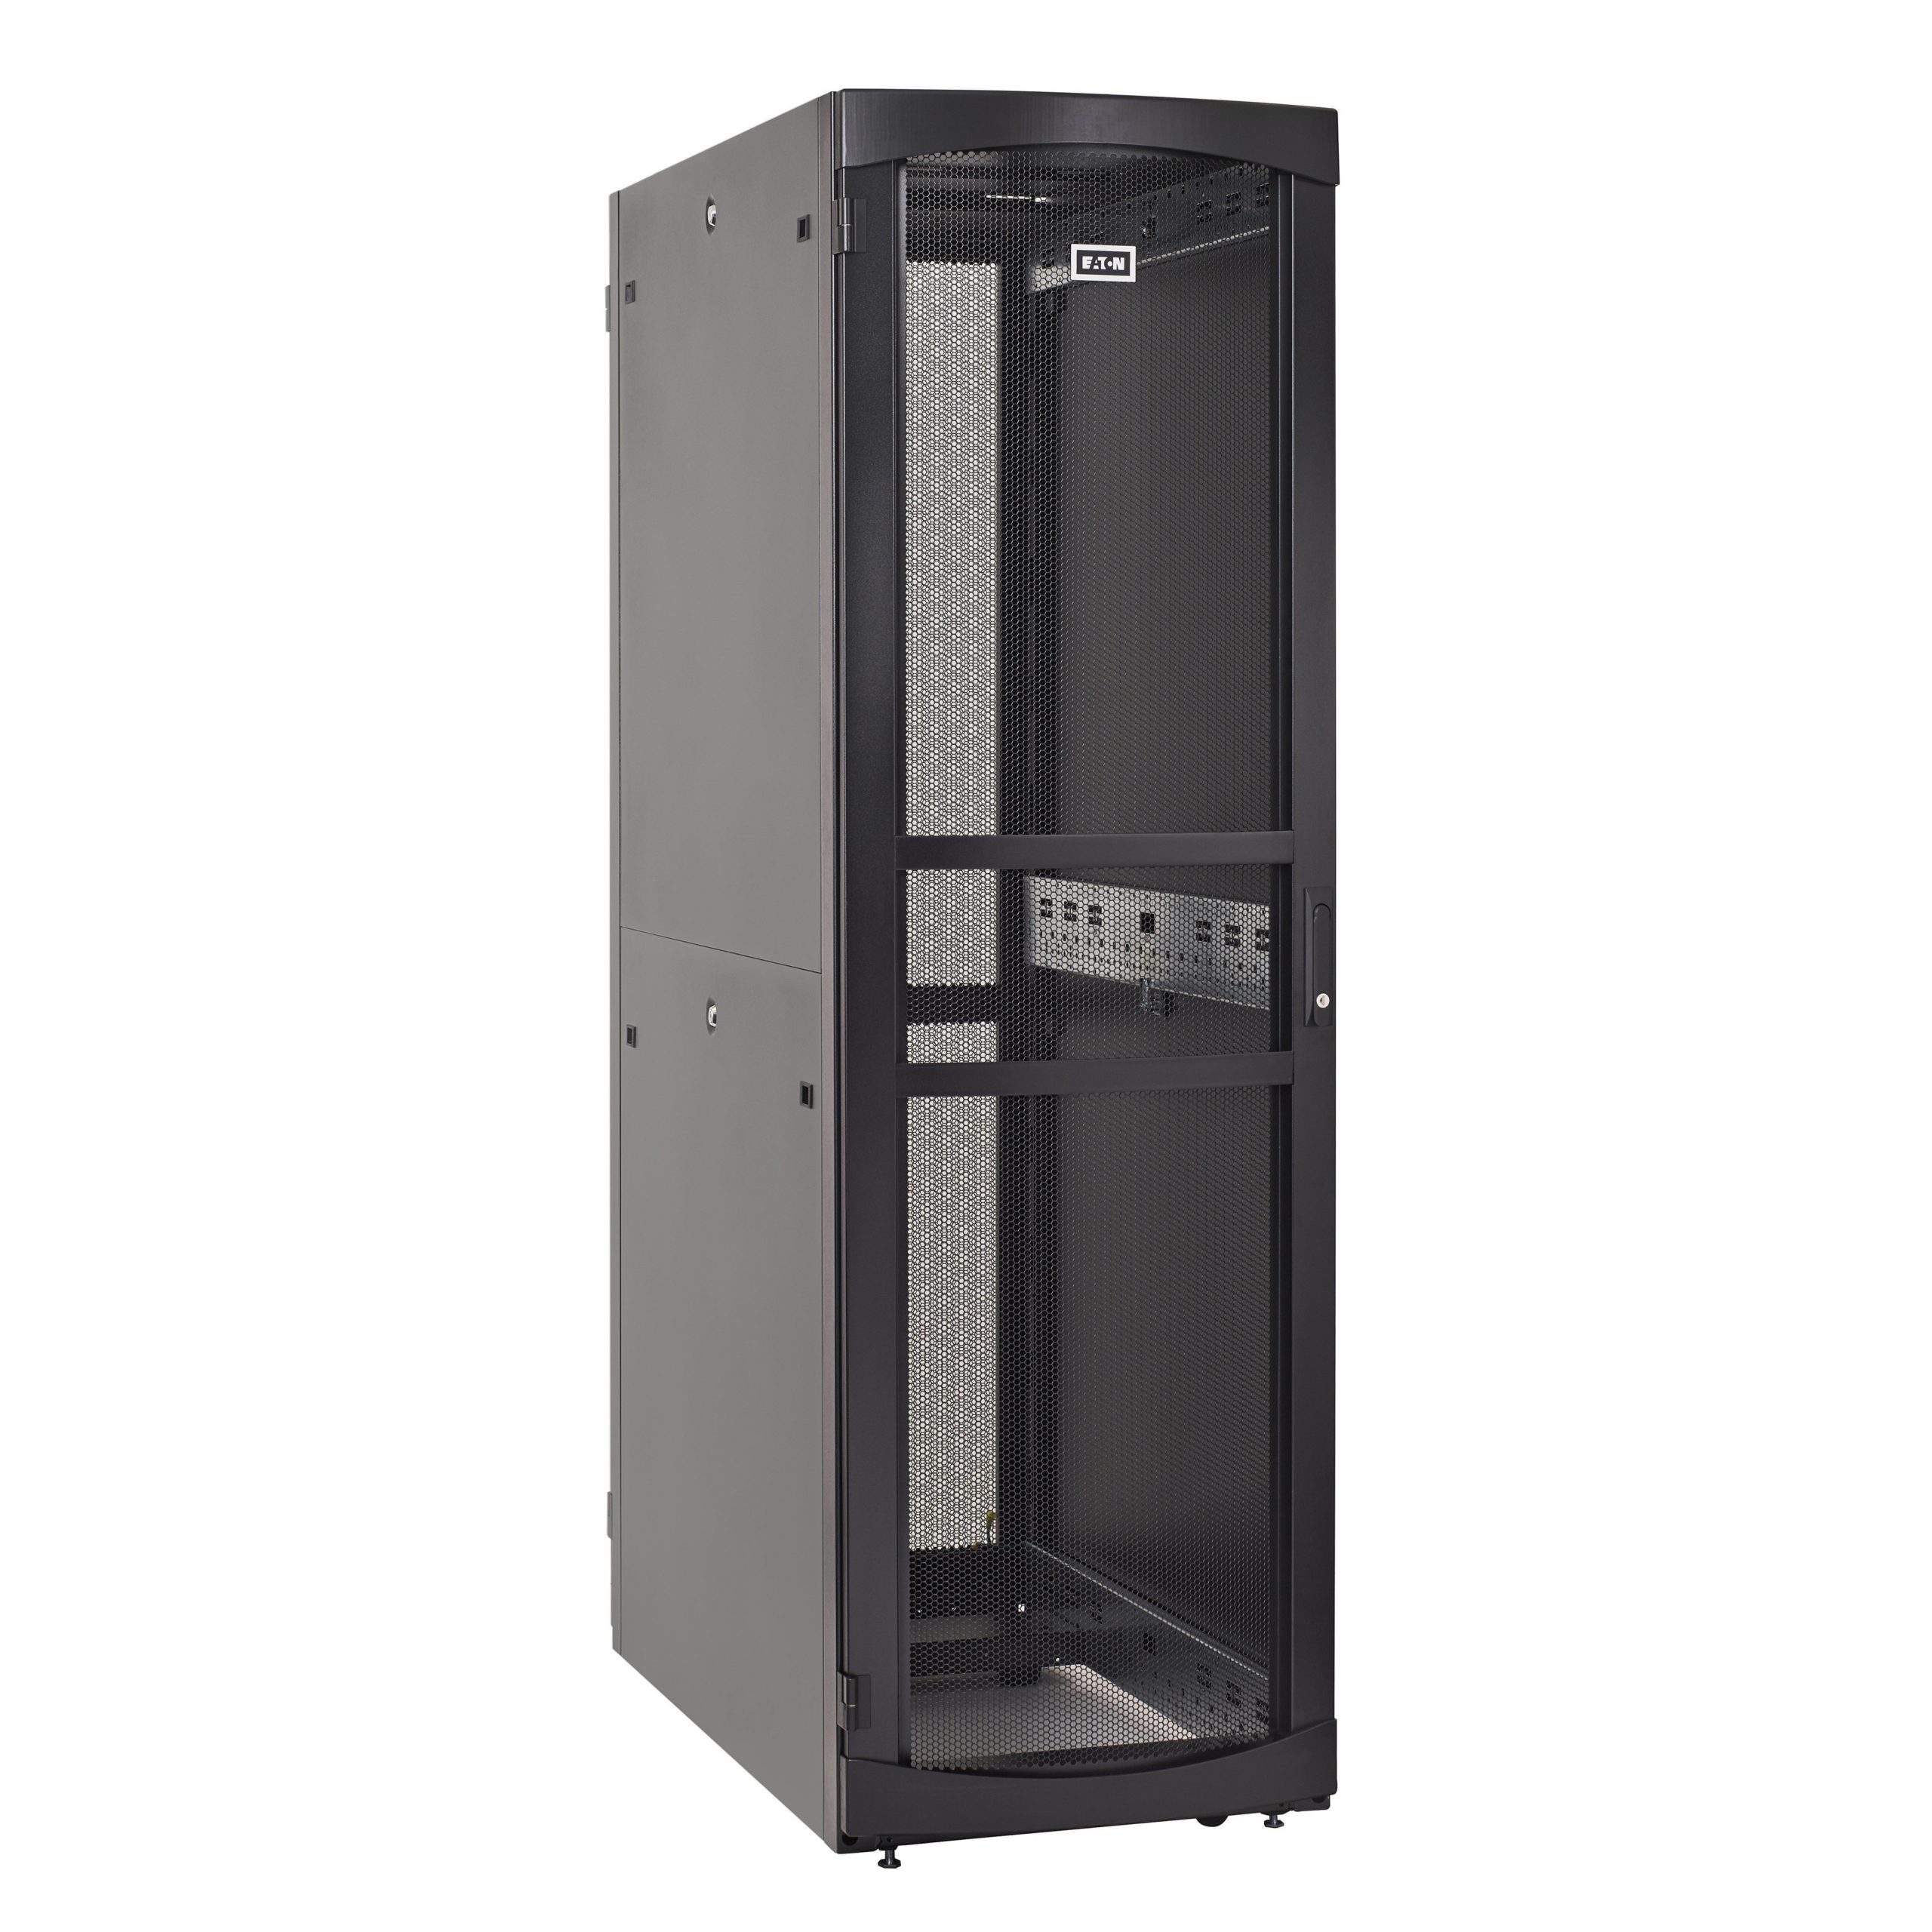 Eaton Enclosure,52U, 600mm W x 1000mm D BlackFor Server, UPS52U Rack HeightBlack RSV5260B